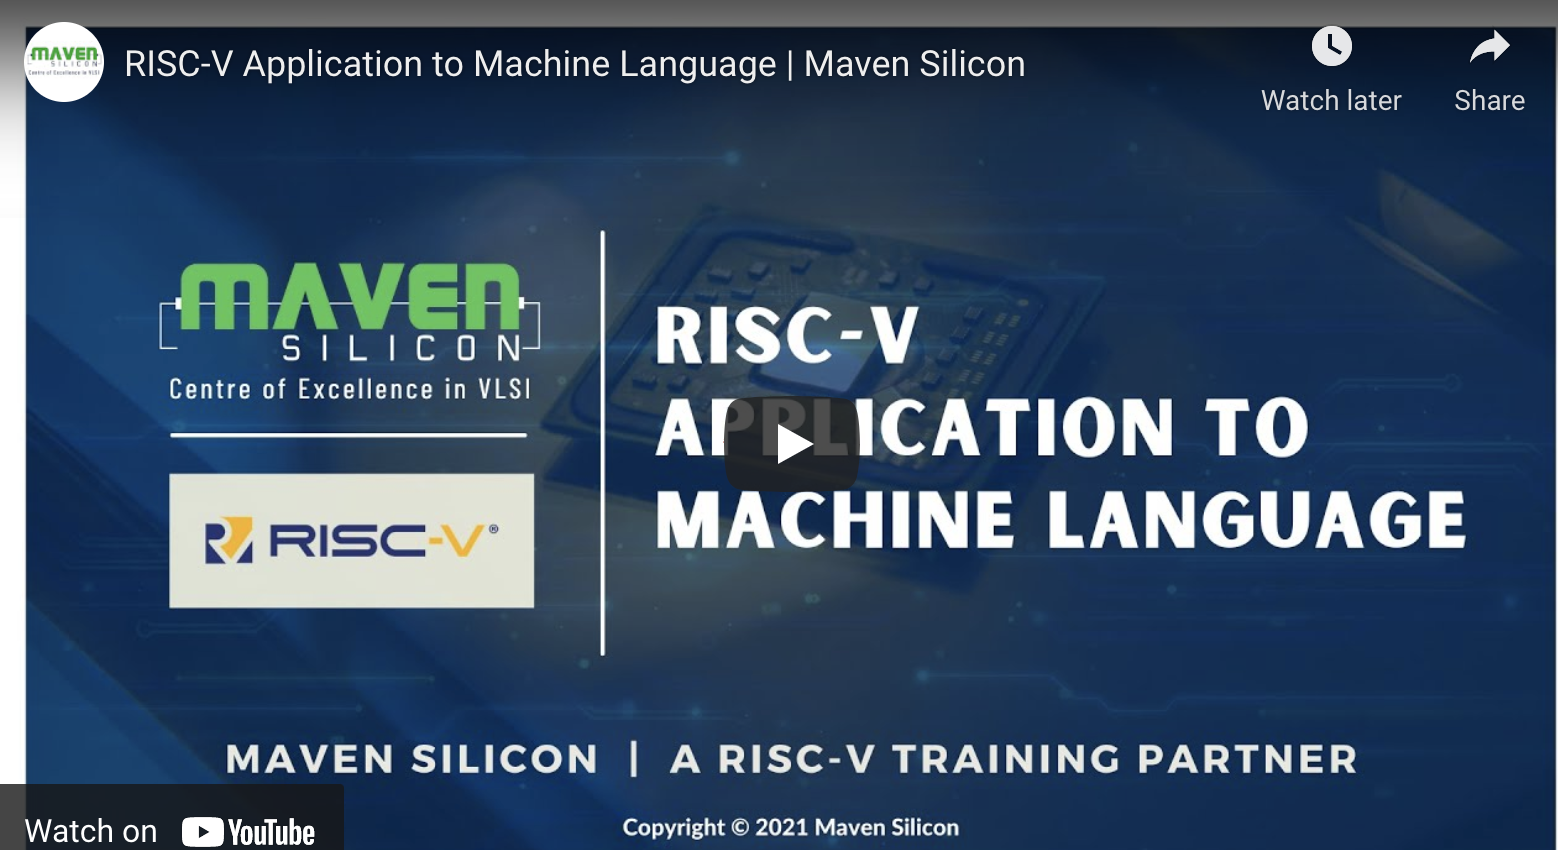 RISC-V Application to Machine Language | Maven Silicon